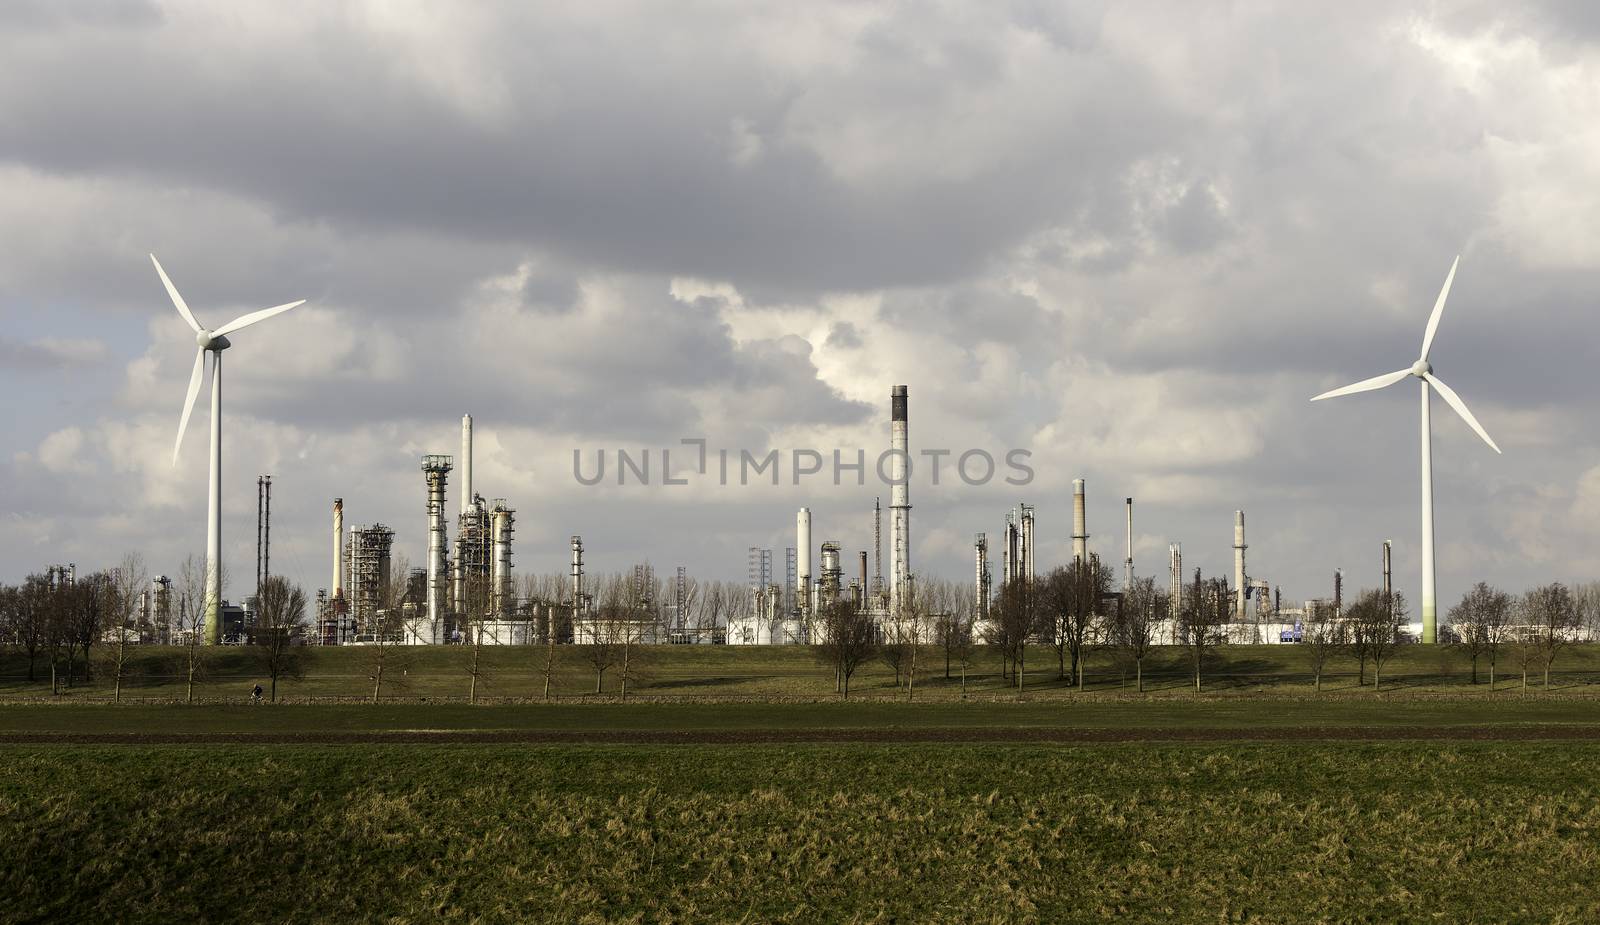 skyline refinery europoort rotterdam holland 